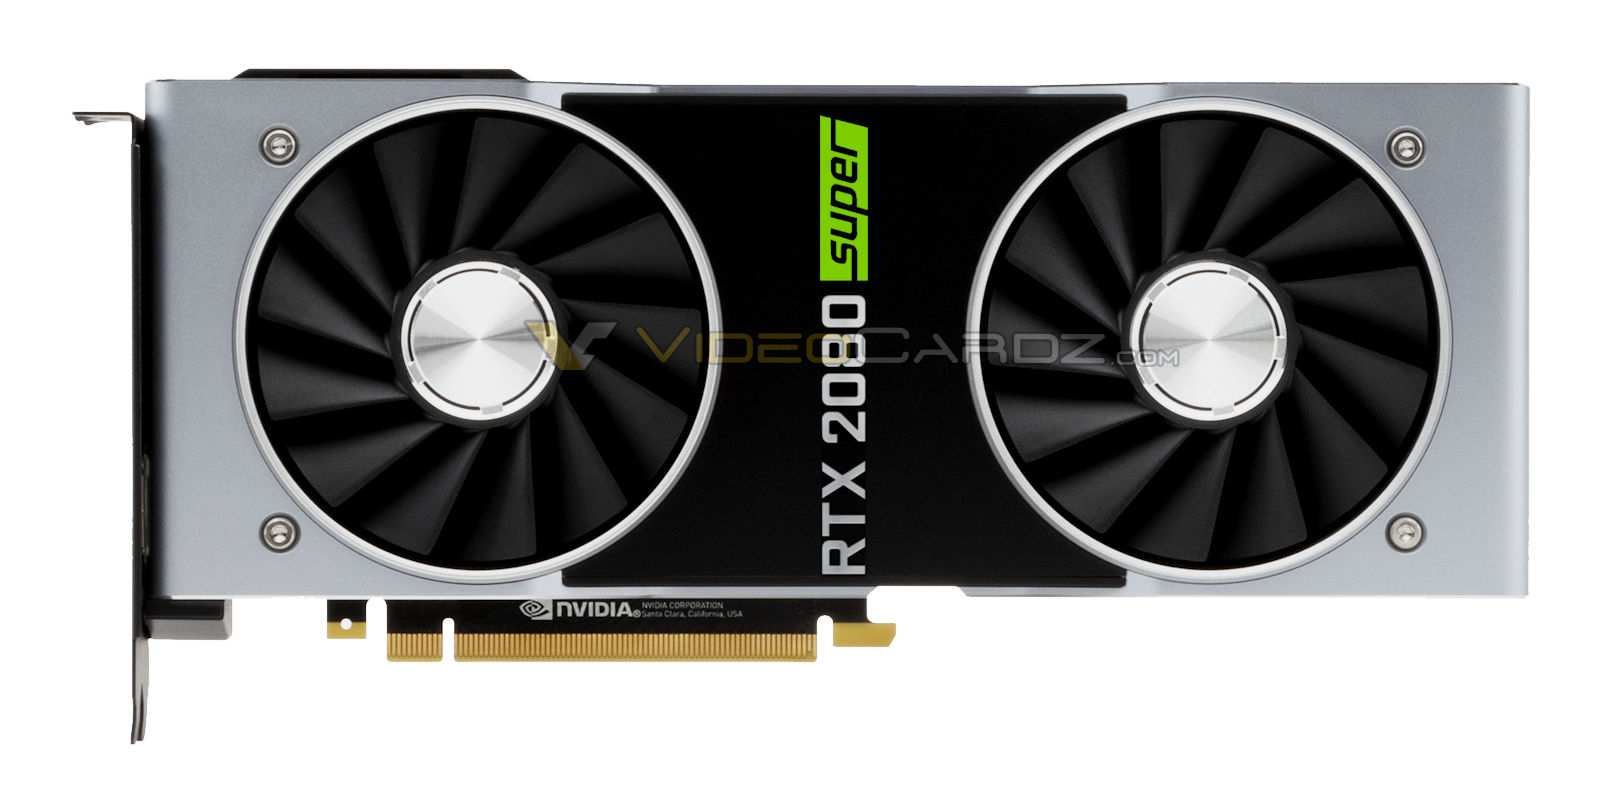 Soldaat Rechthoek leider NVIDIA GeForce RTX 2080 Super GPU - Benchmarks and Specs -  NotebookCheck.net Tech